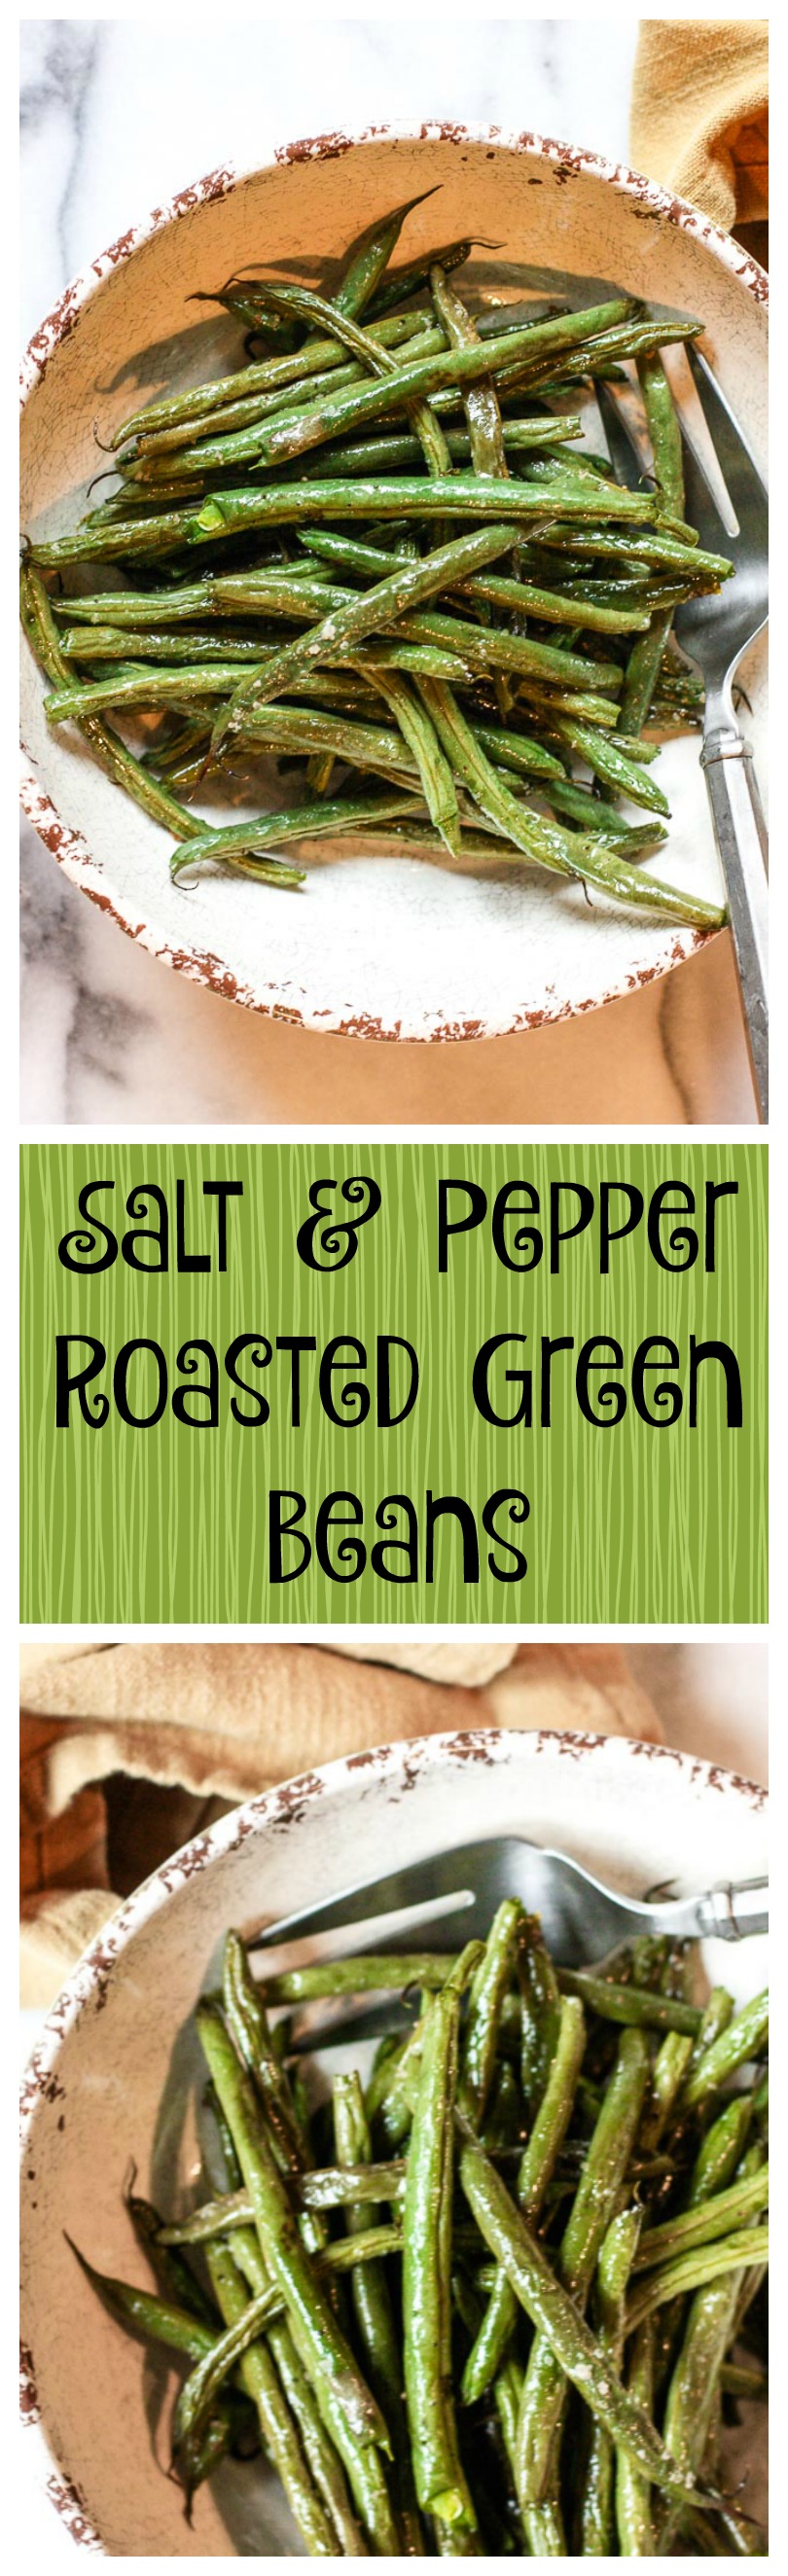 salt and pepper roasted green beans